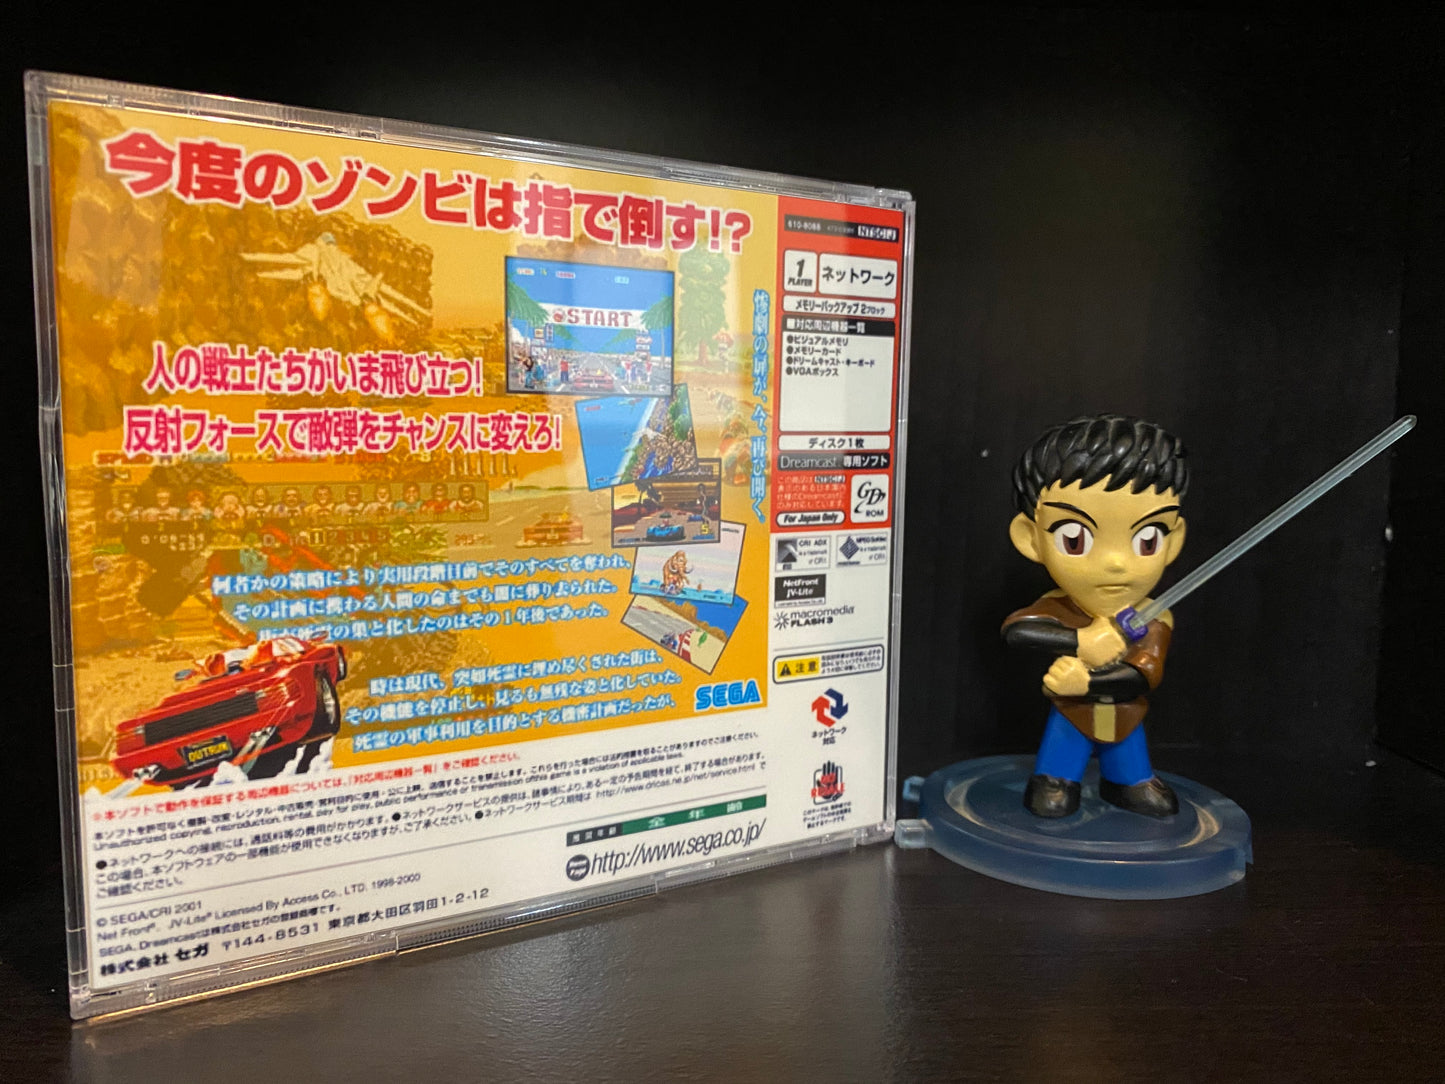 Yu Suzuki Game Works [Sega Dreamcast] Reproduction